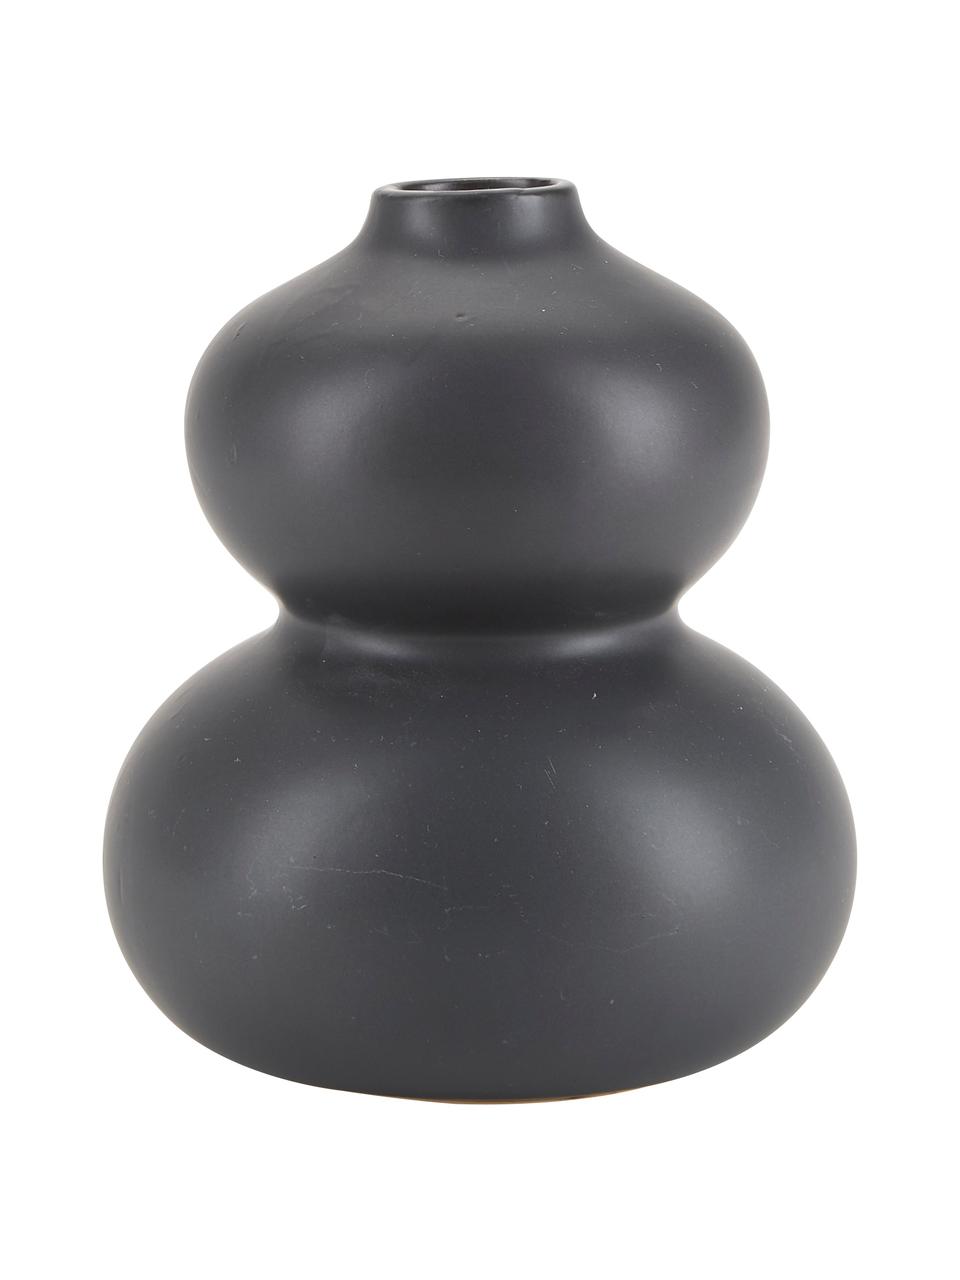 Kleine Vase Bobble aus Keramik, Keramik, Schwarz, Ø 13 x H 15 cm